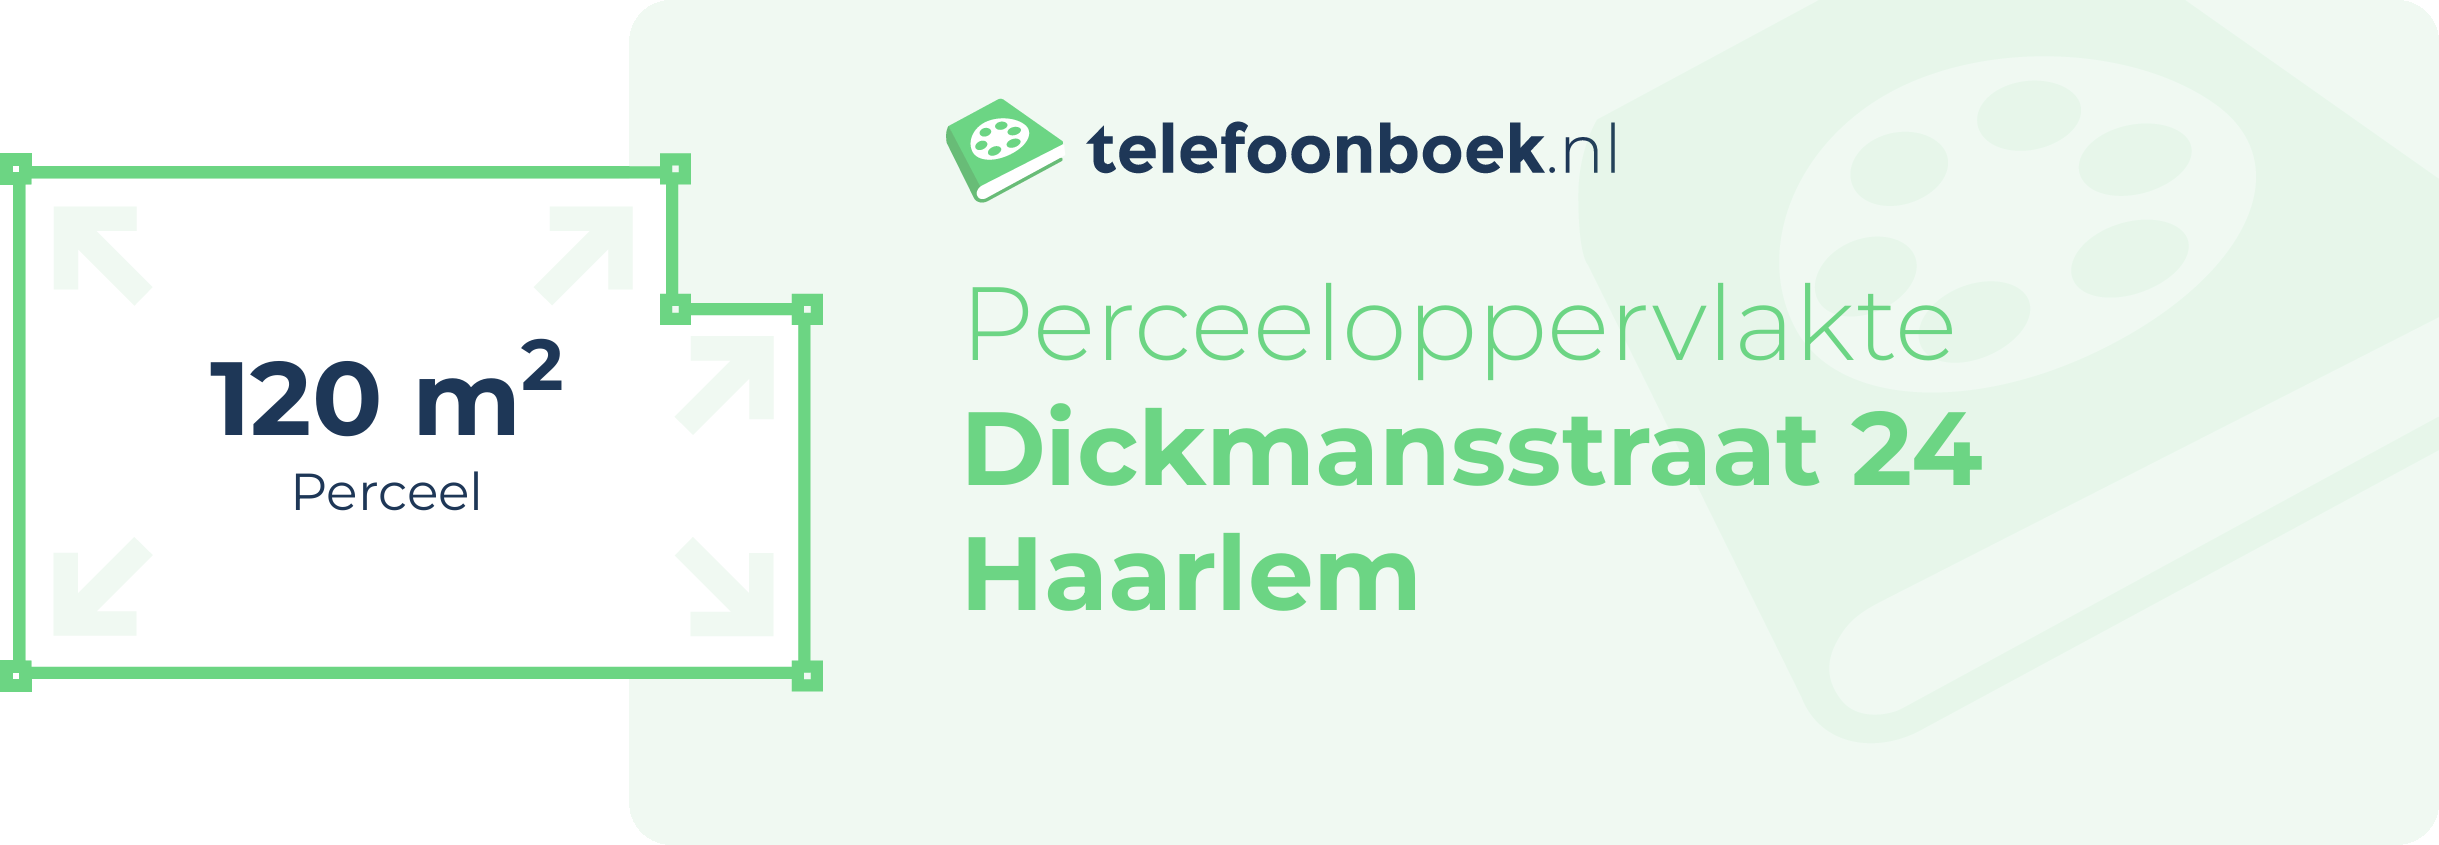 Perceeloppervlakte Dickmansstraat 24 Haarlem